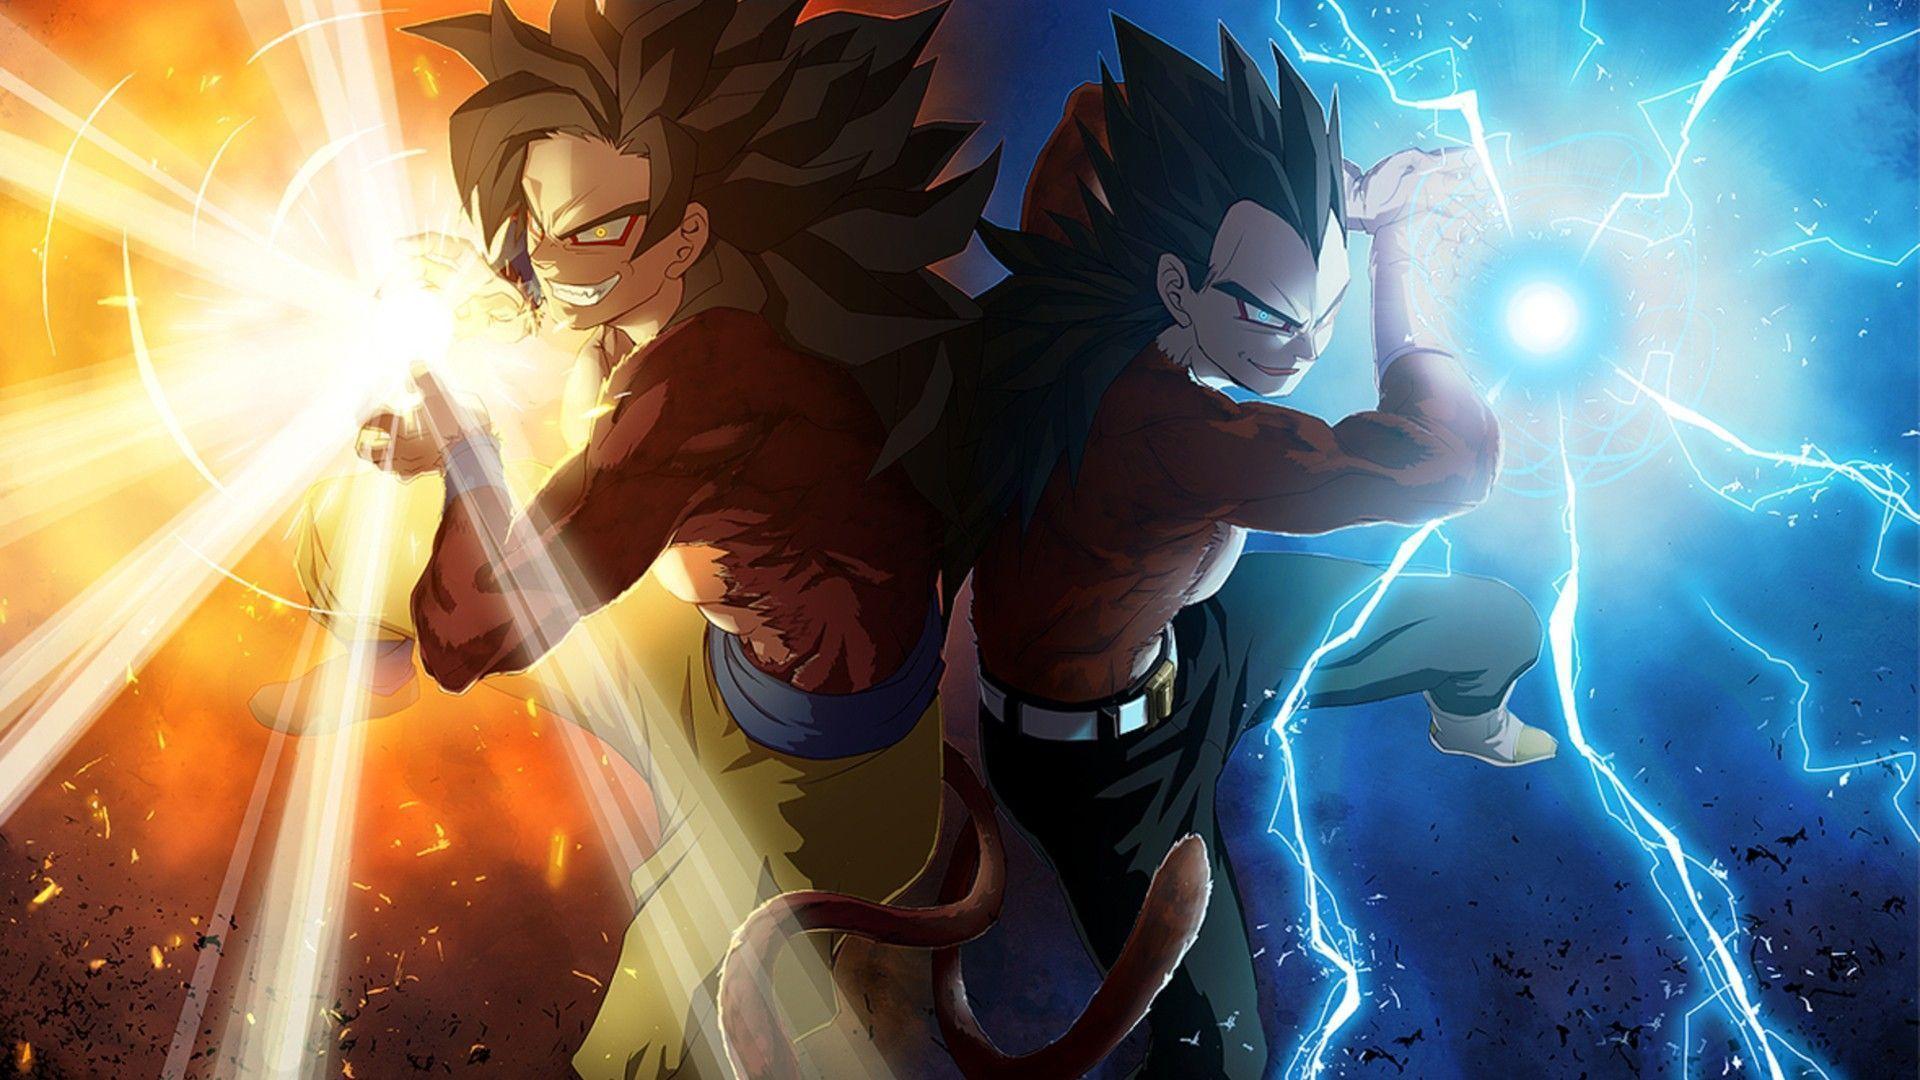 image For > Dbz Wallpaper Goku And Vegeta Ssj4